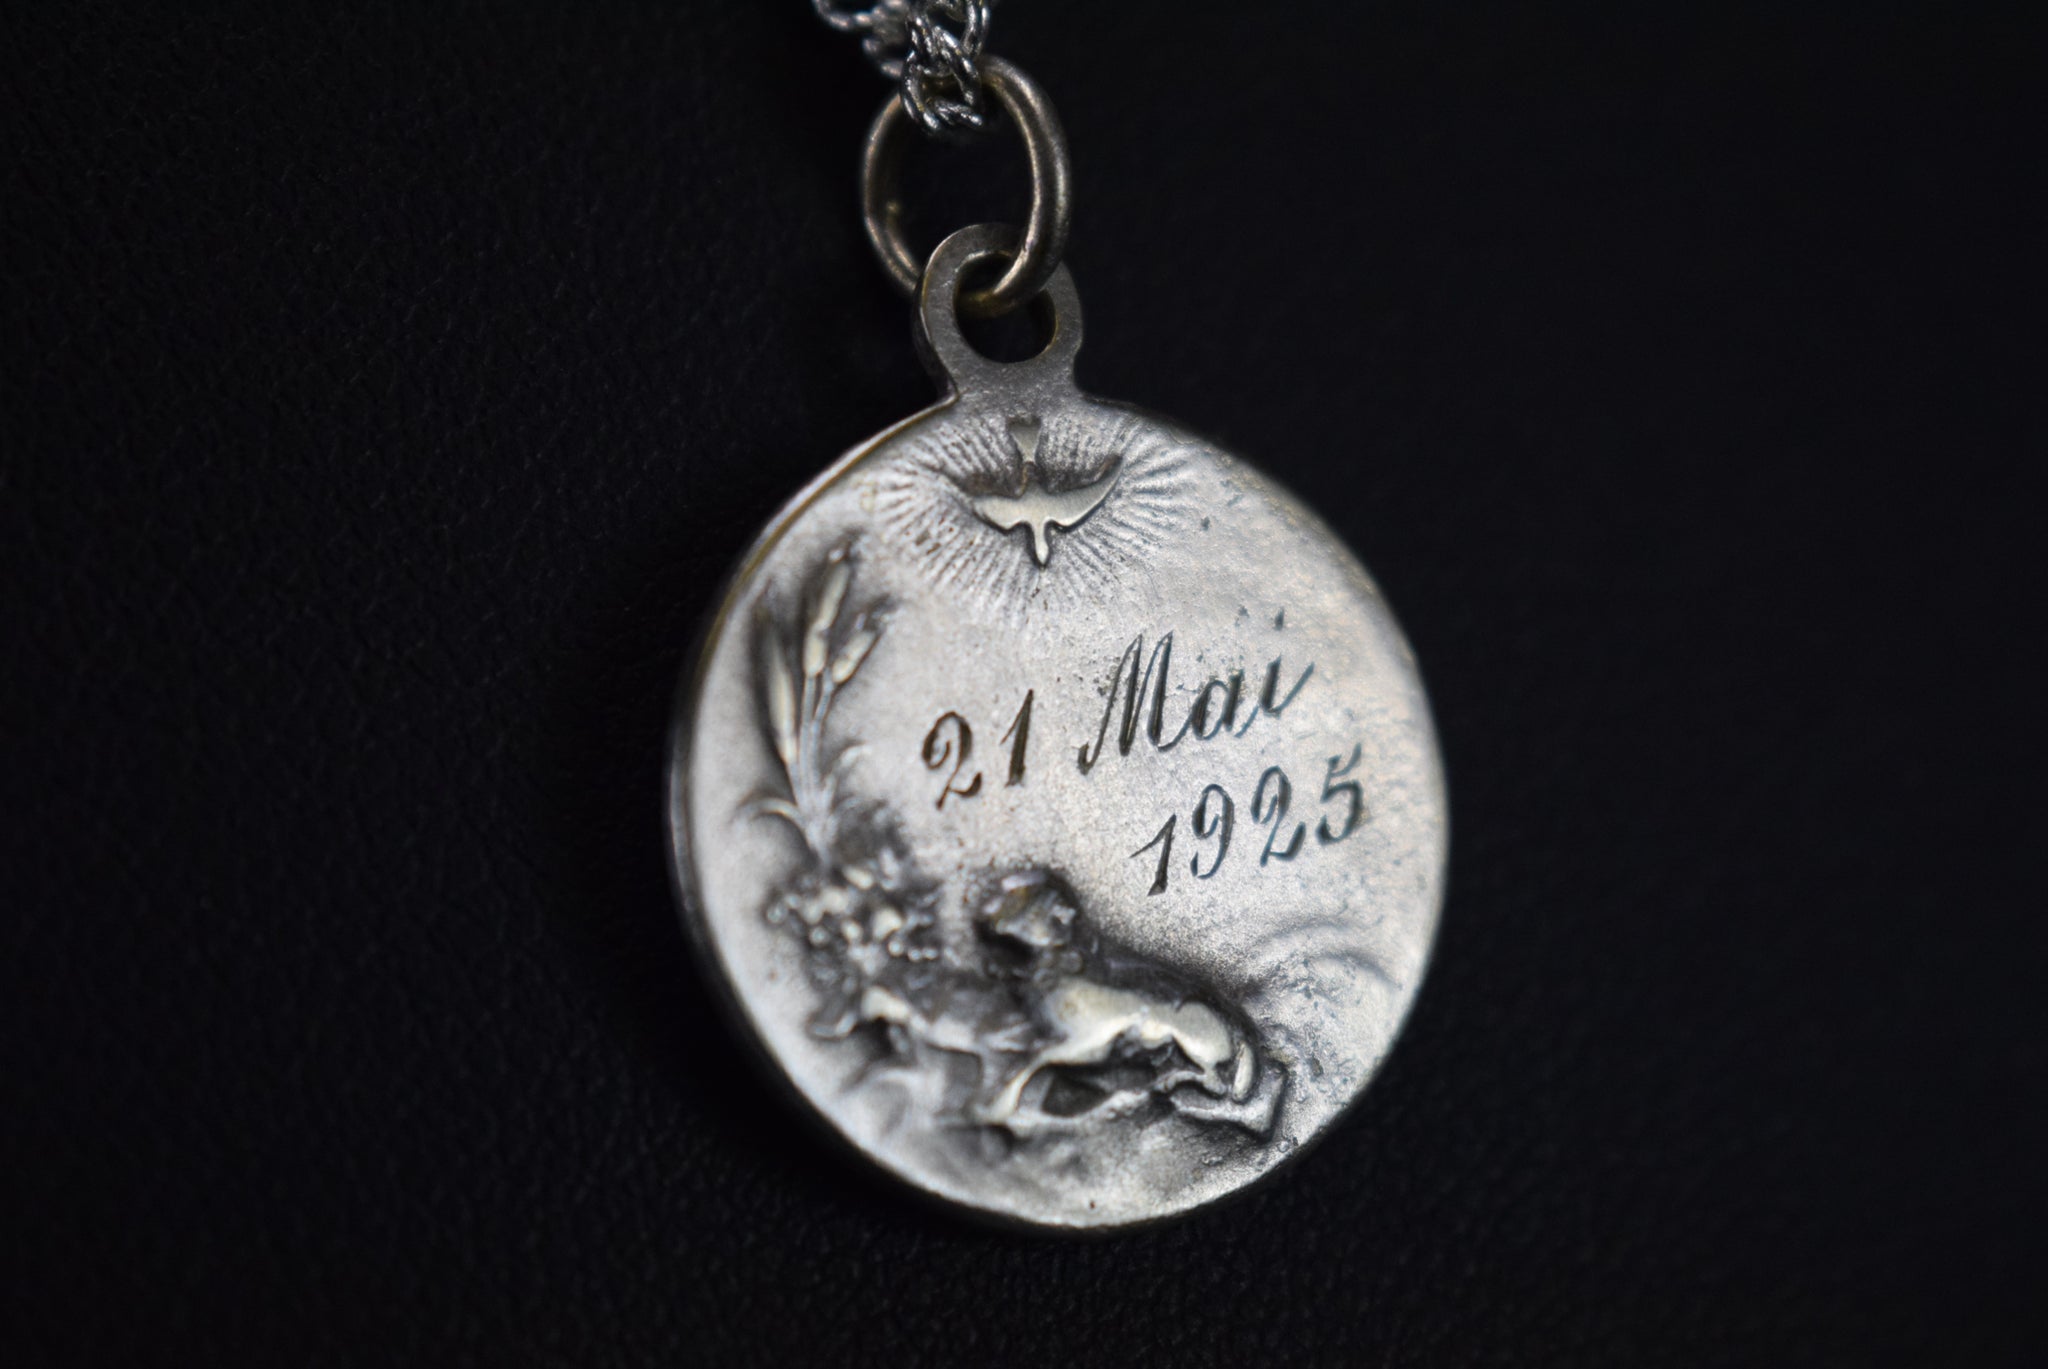 Antique The Eucharist Medal Pendant 1925 Communion Gift